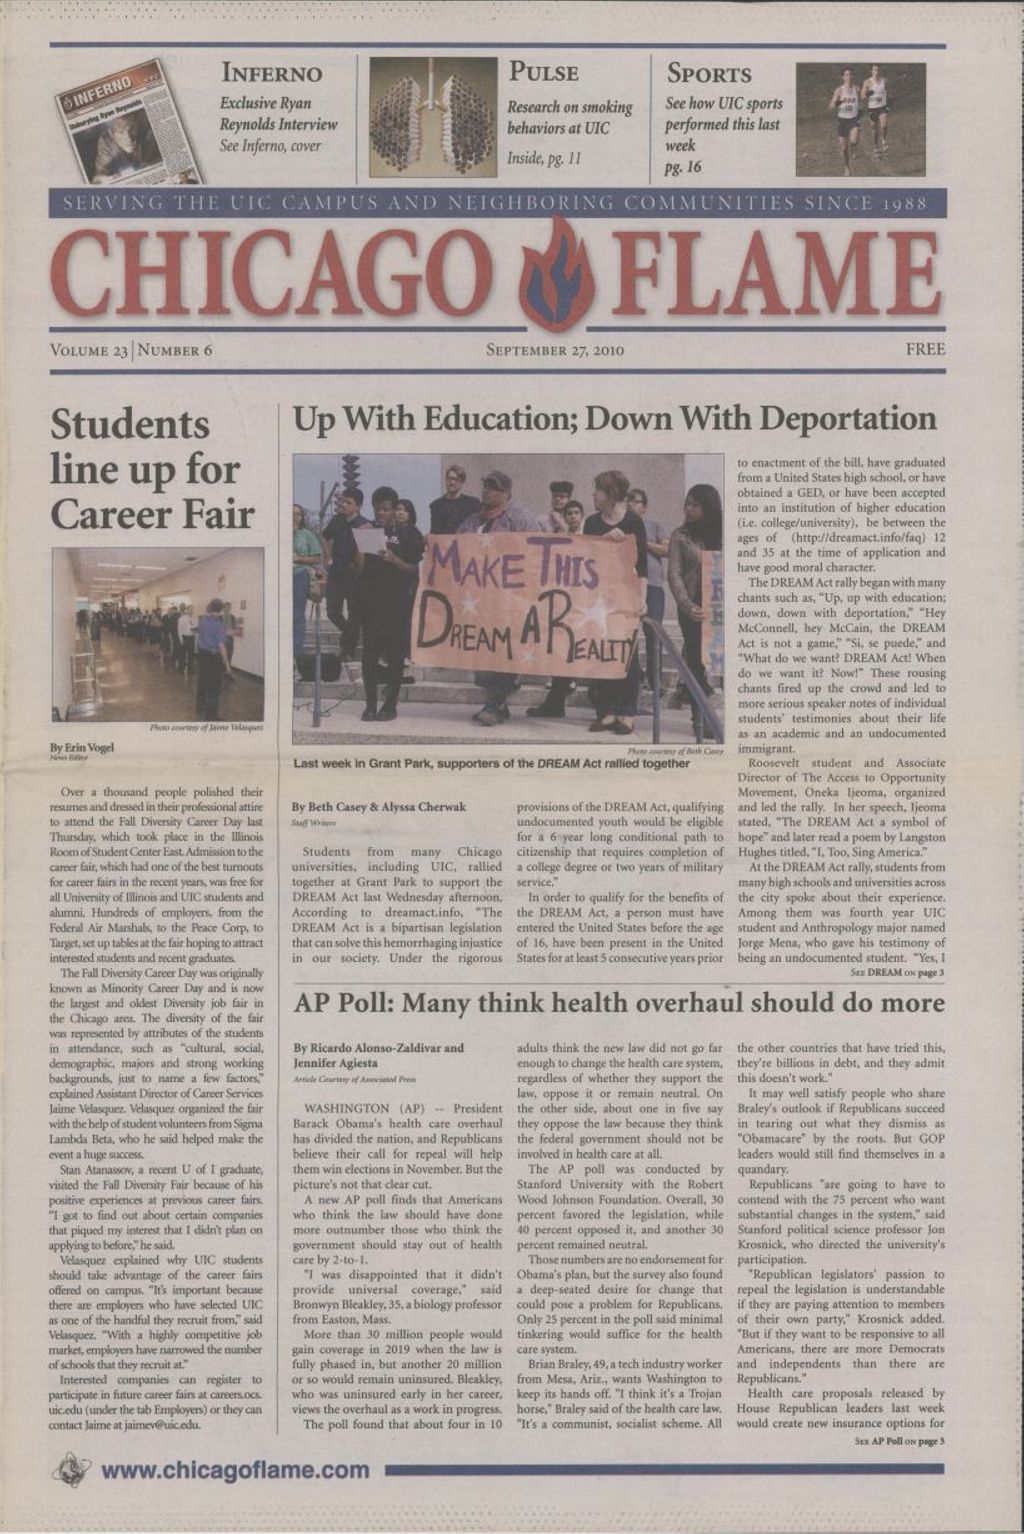 Chicago Flame (September 27, 2010)